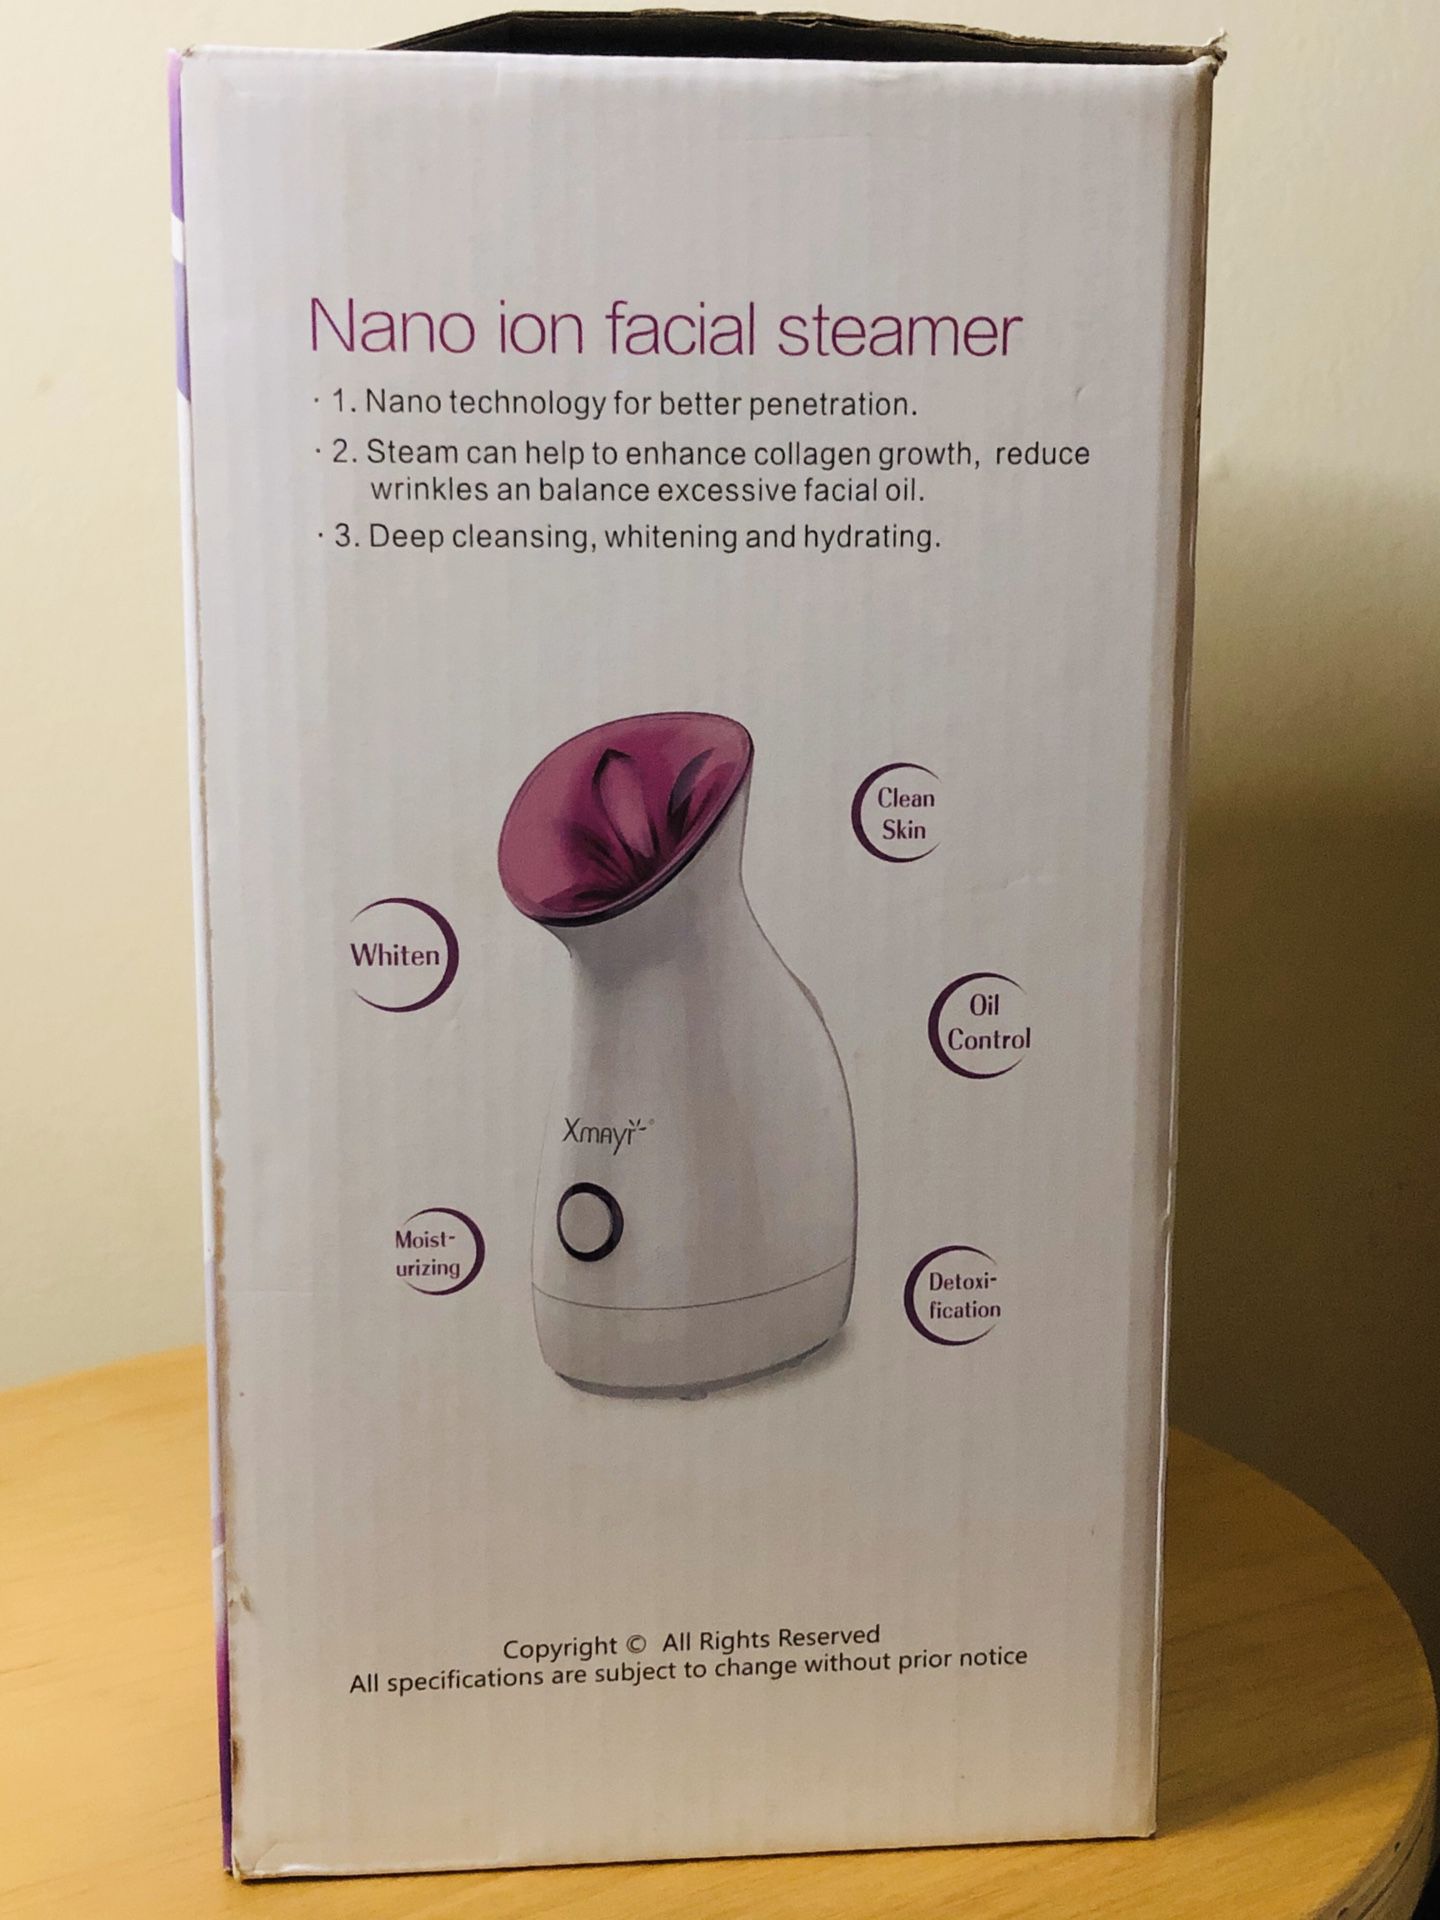 Brand new facial steamer